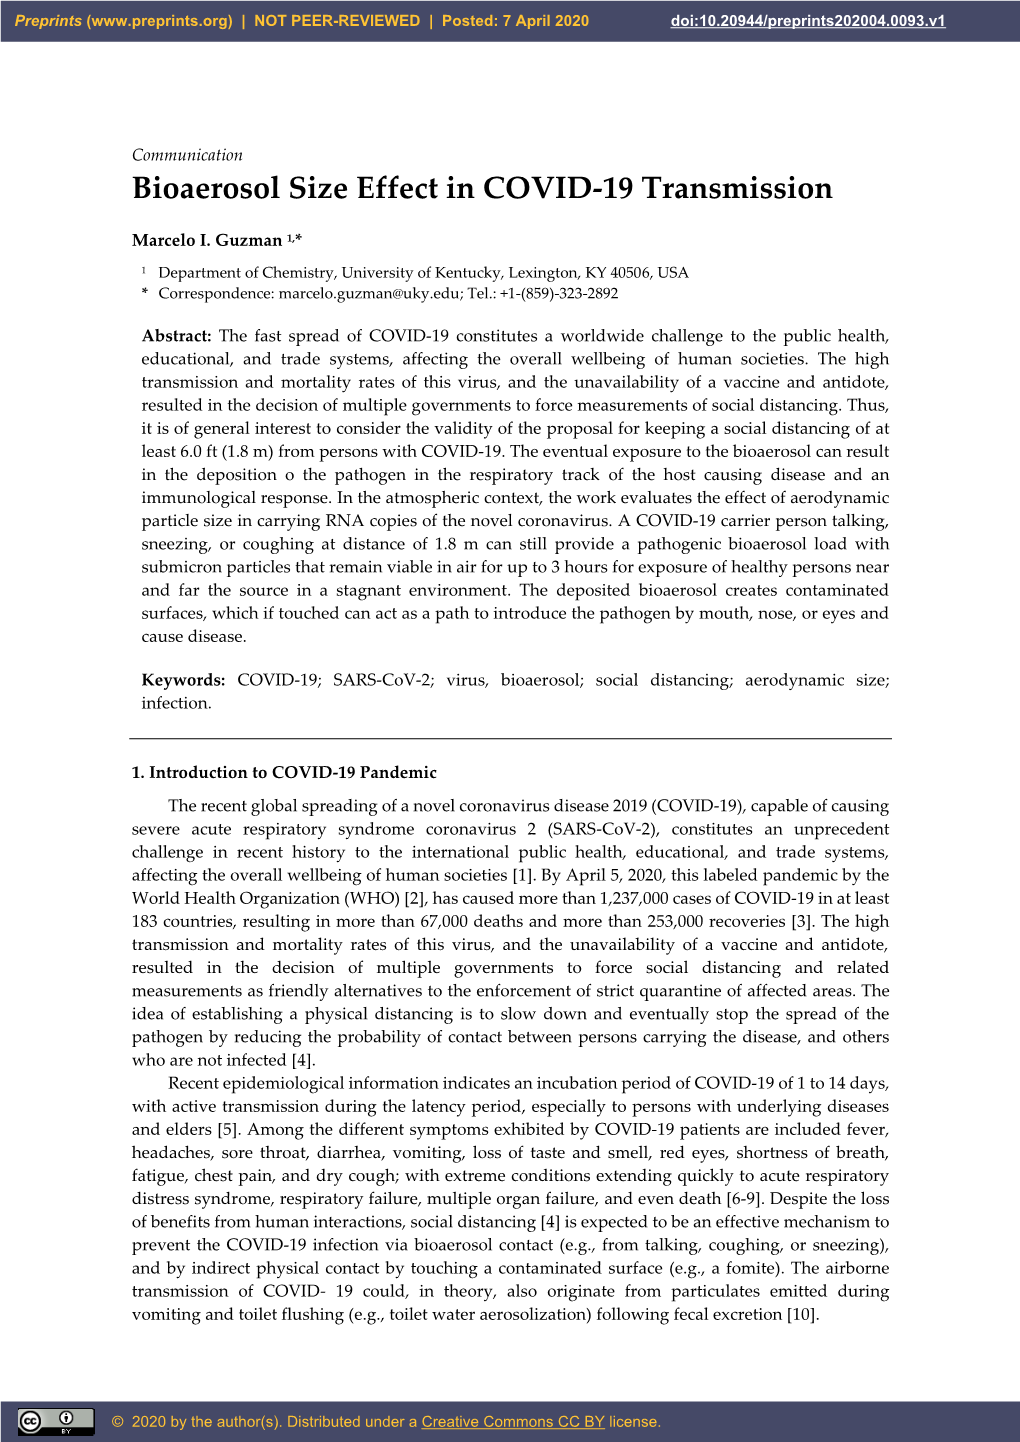 Bioaerosol Size Effect in COVID-19 Transmission